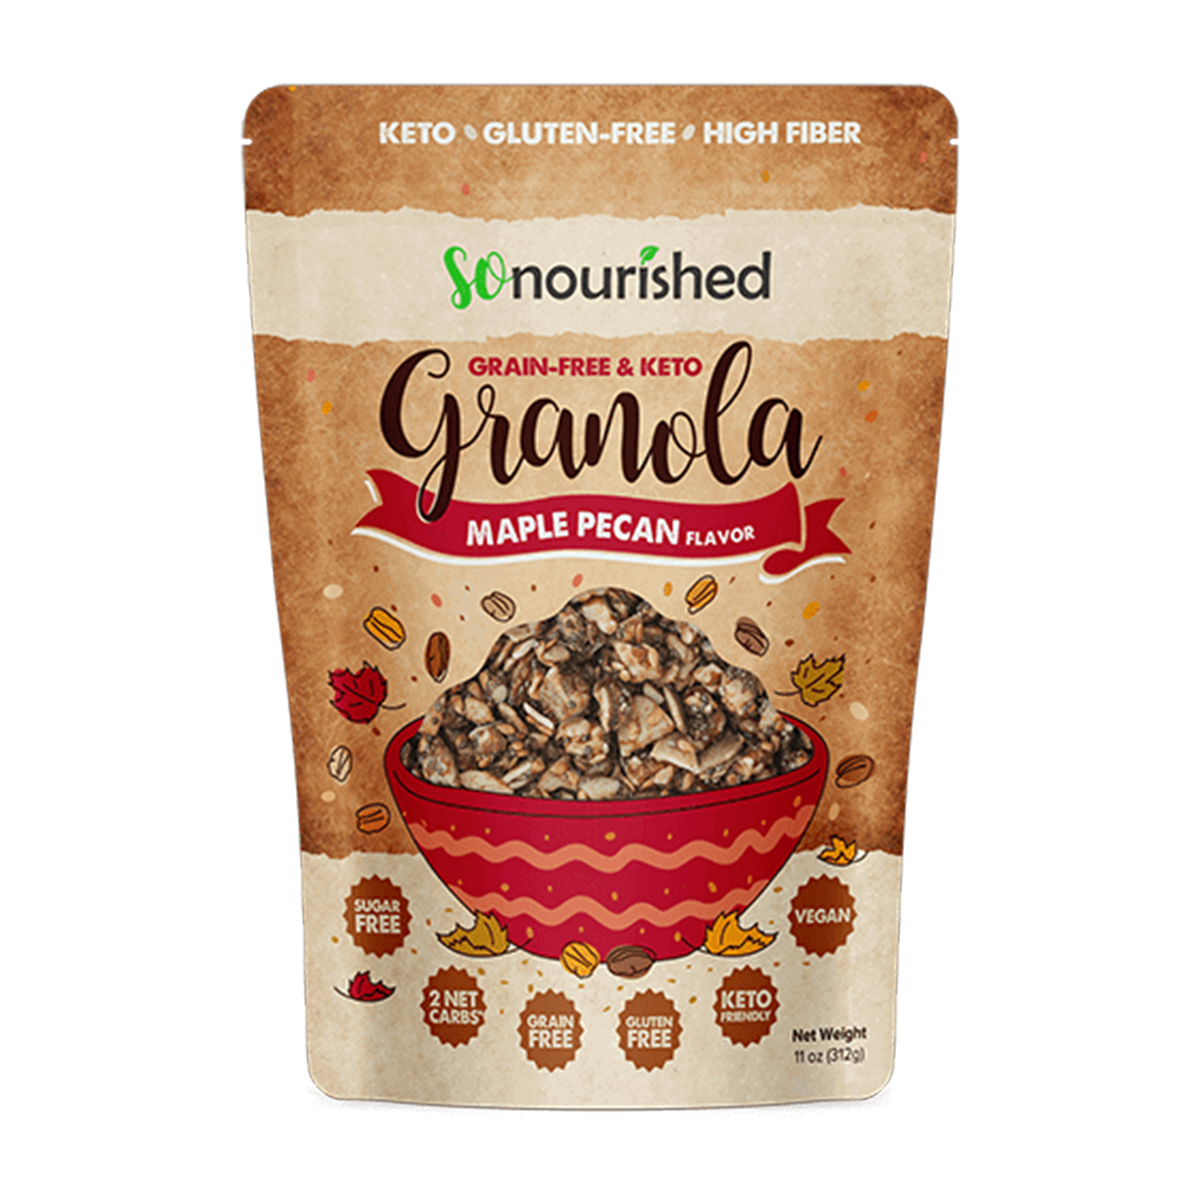 So Nourished Keto Granola Mix